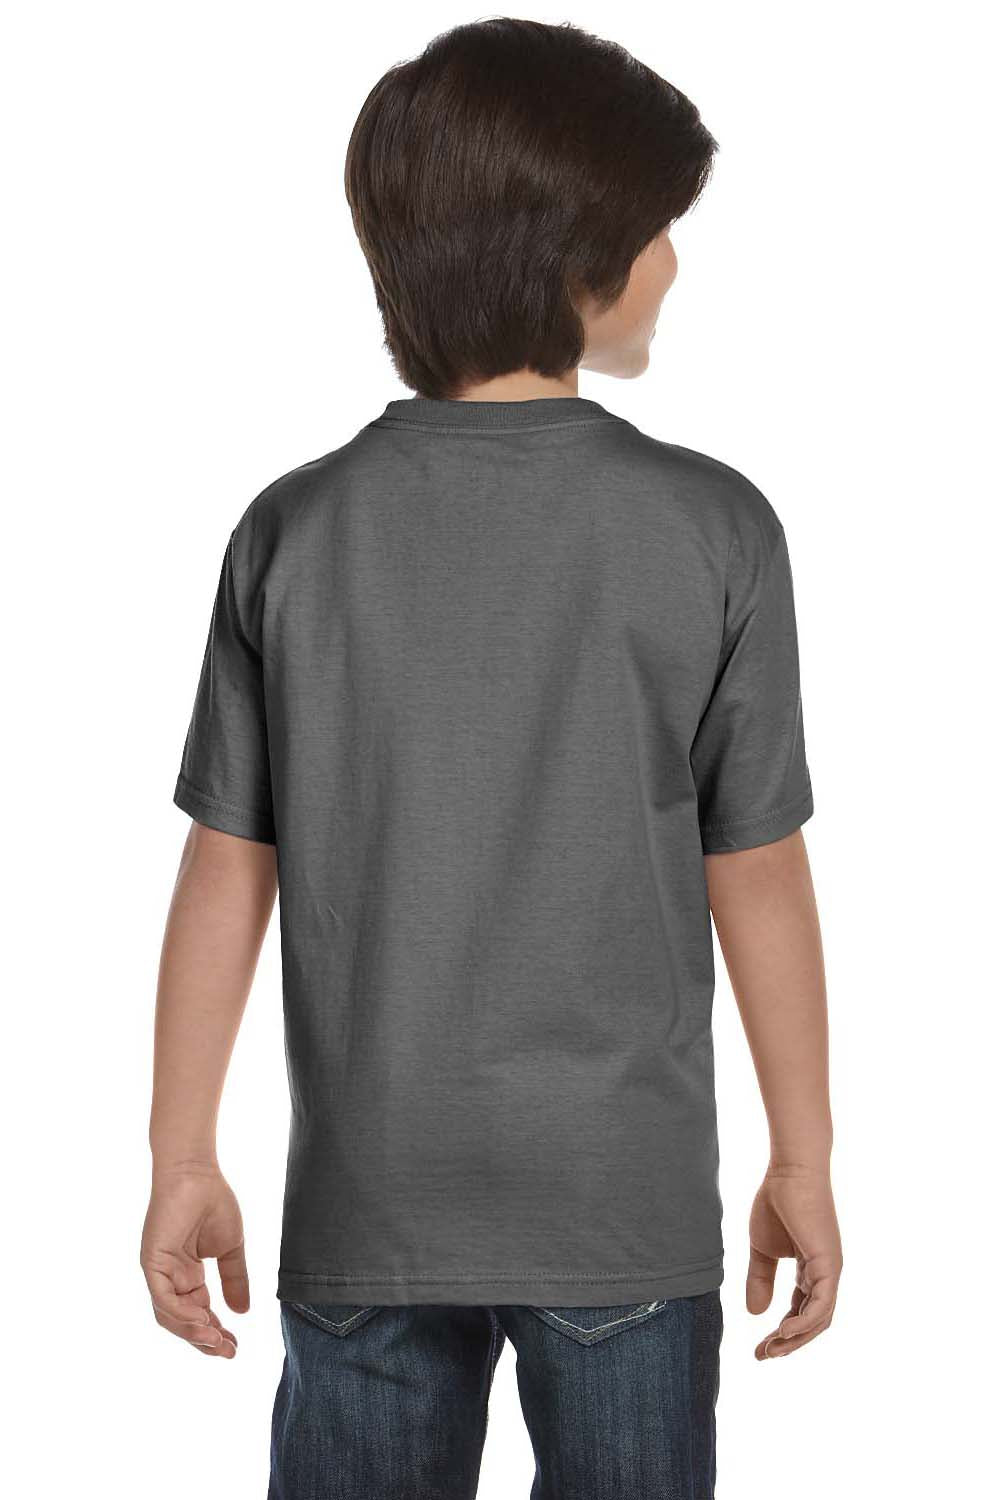 Hanes 5380 Youth Beefy-T Short Sleeve Crewneck T-Shirt Smoke Grey Back